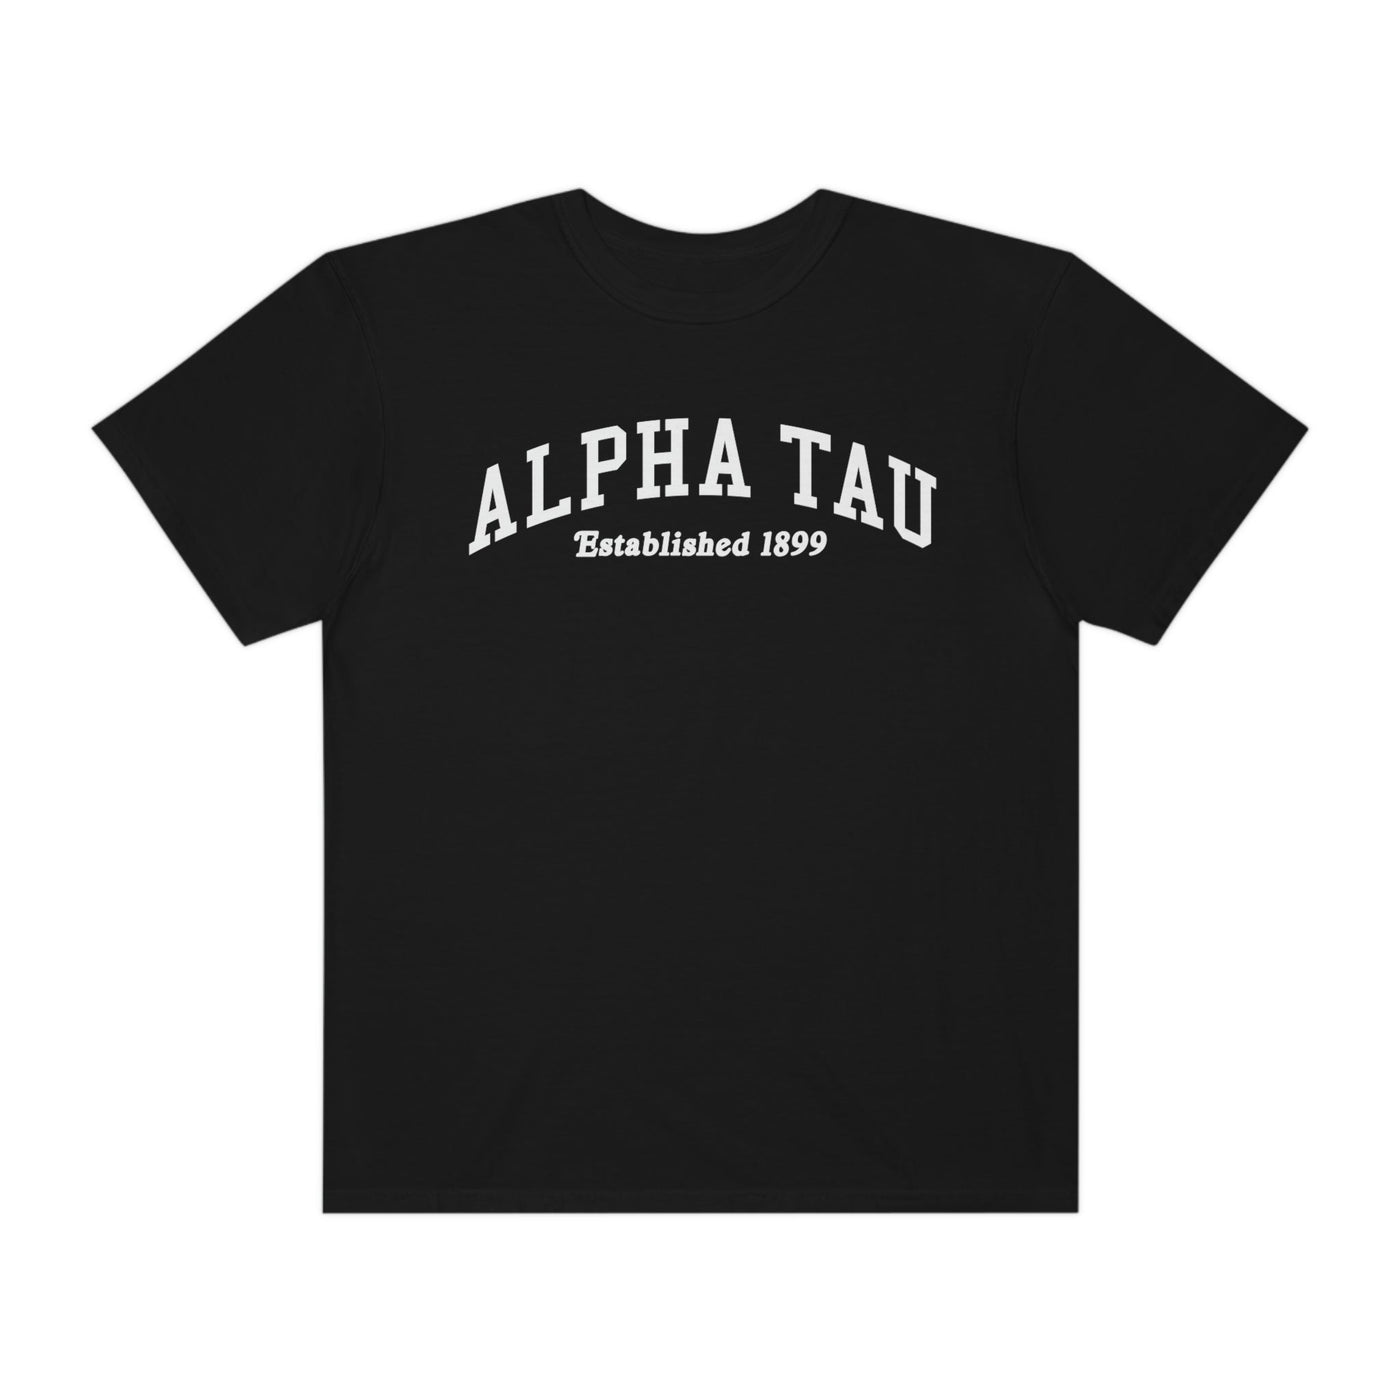 Alpha Sigma Tau Varsity College Sorority Comfy T-Shirt